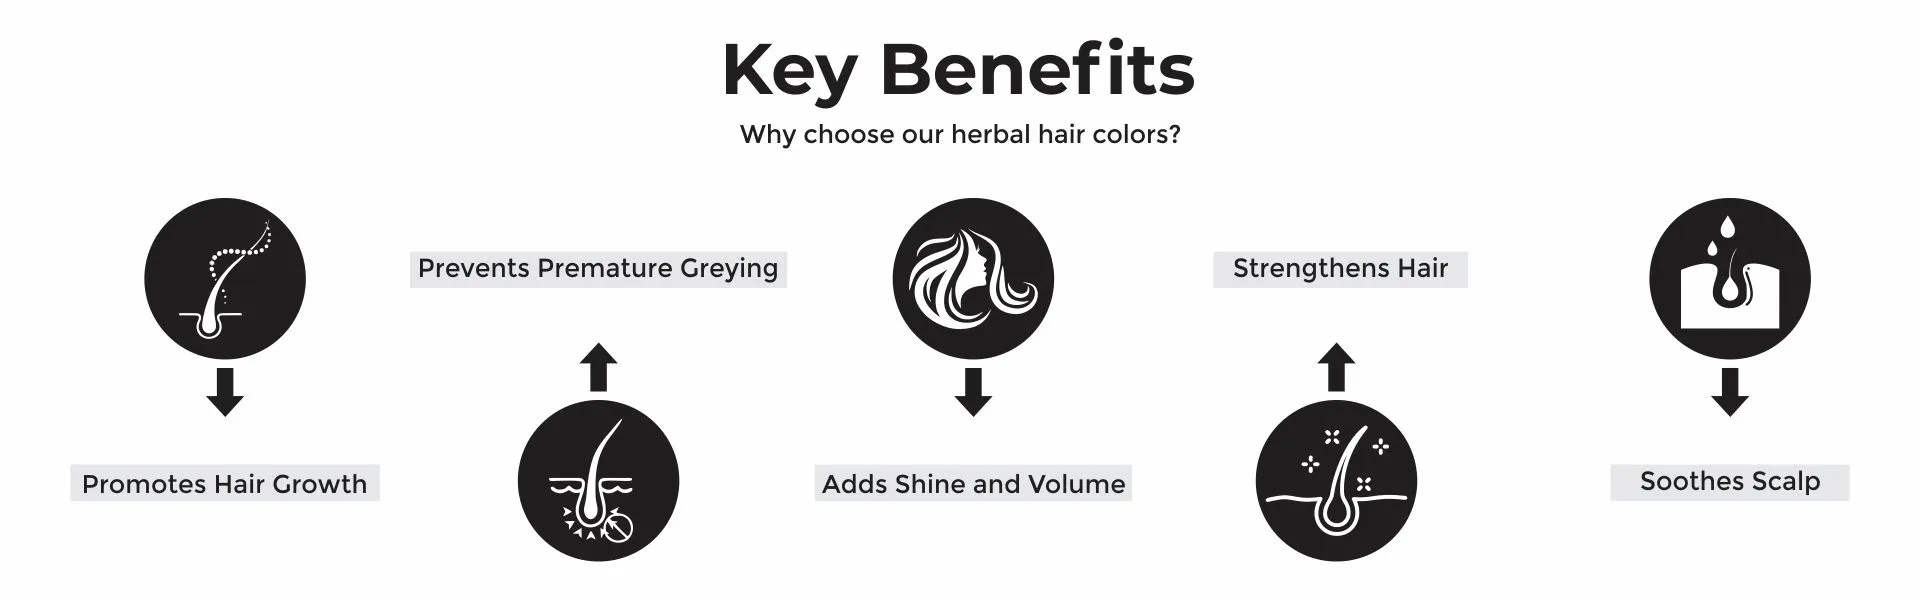 key benefits herbal hair colors - www.dkihenna.com